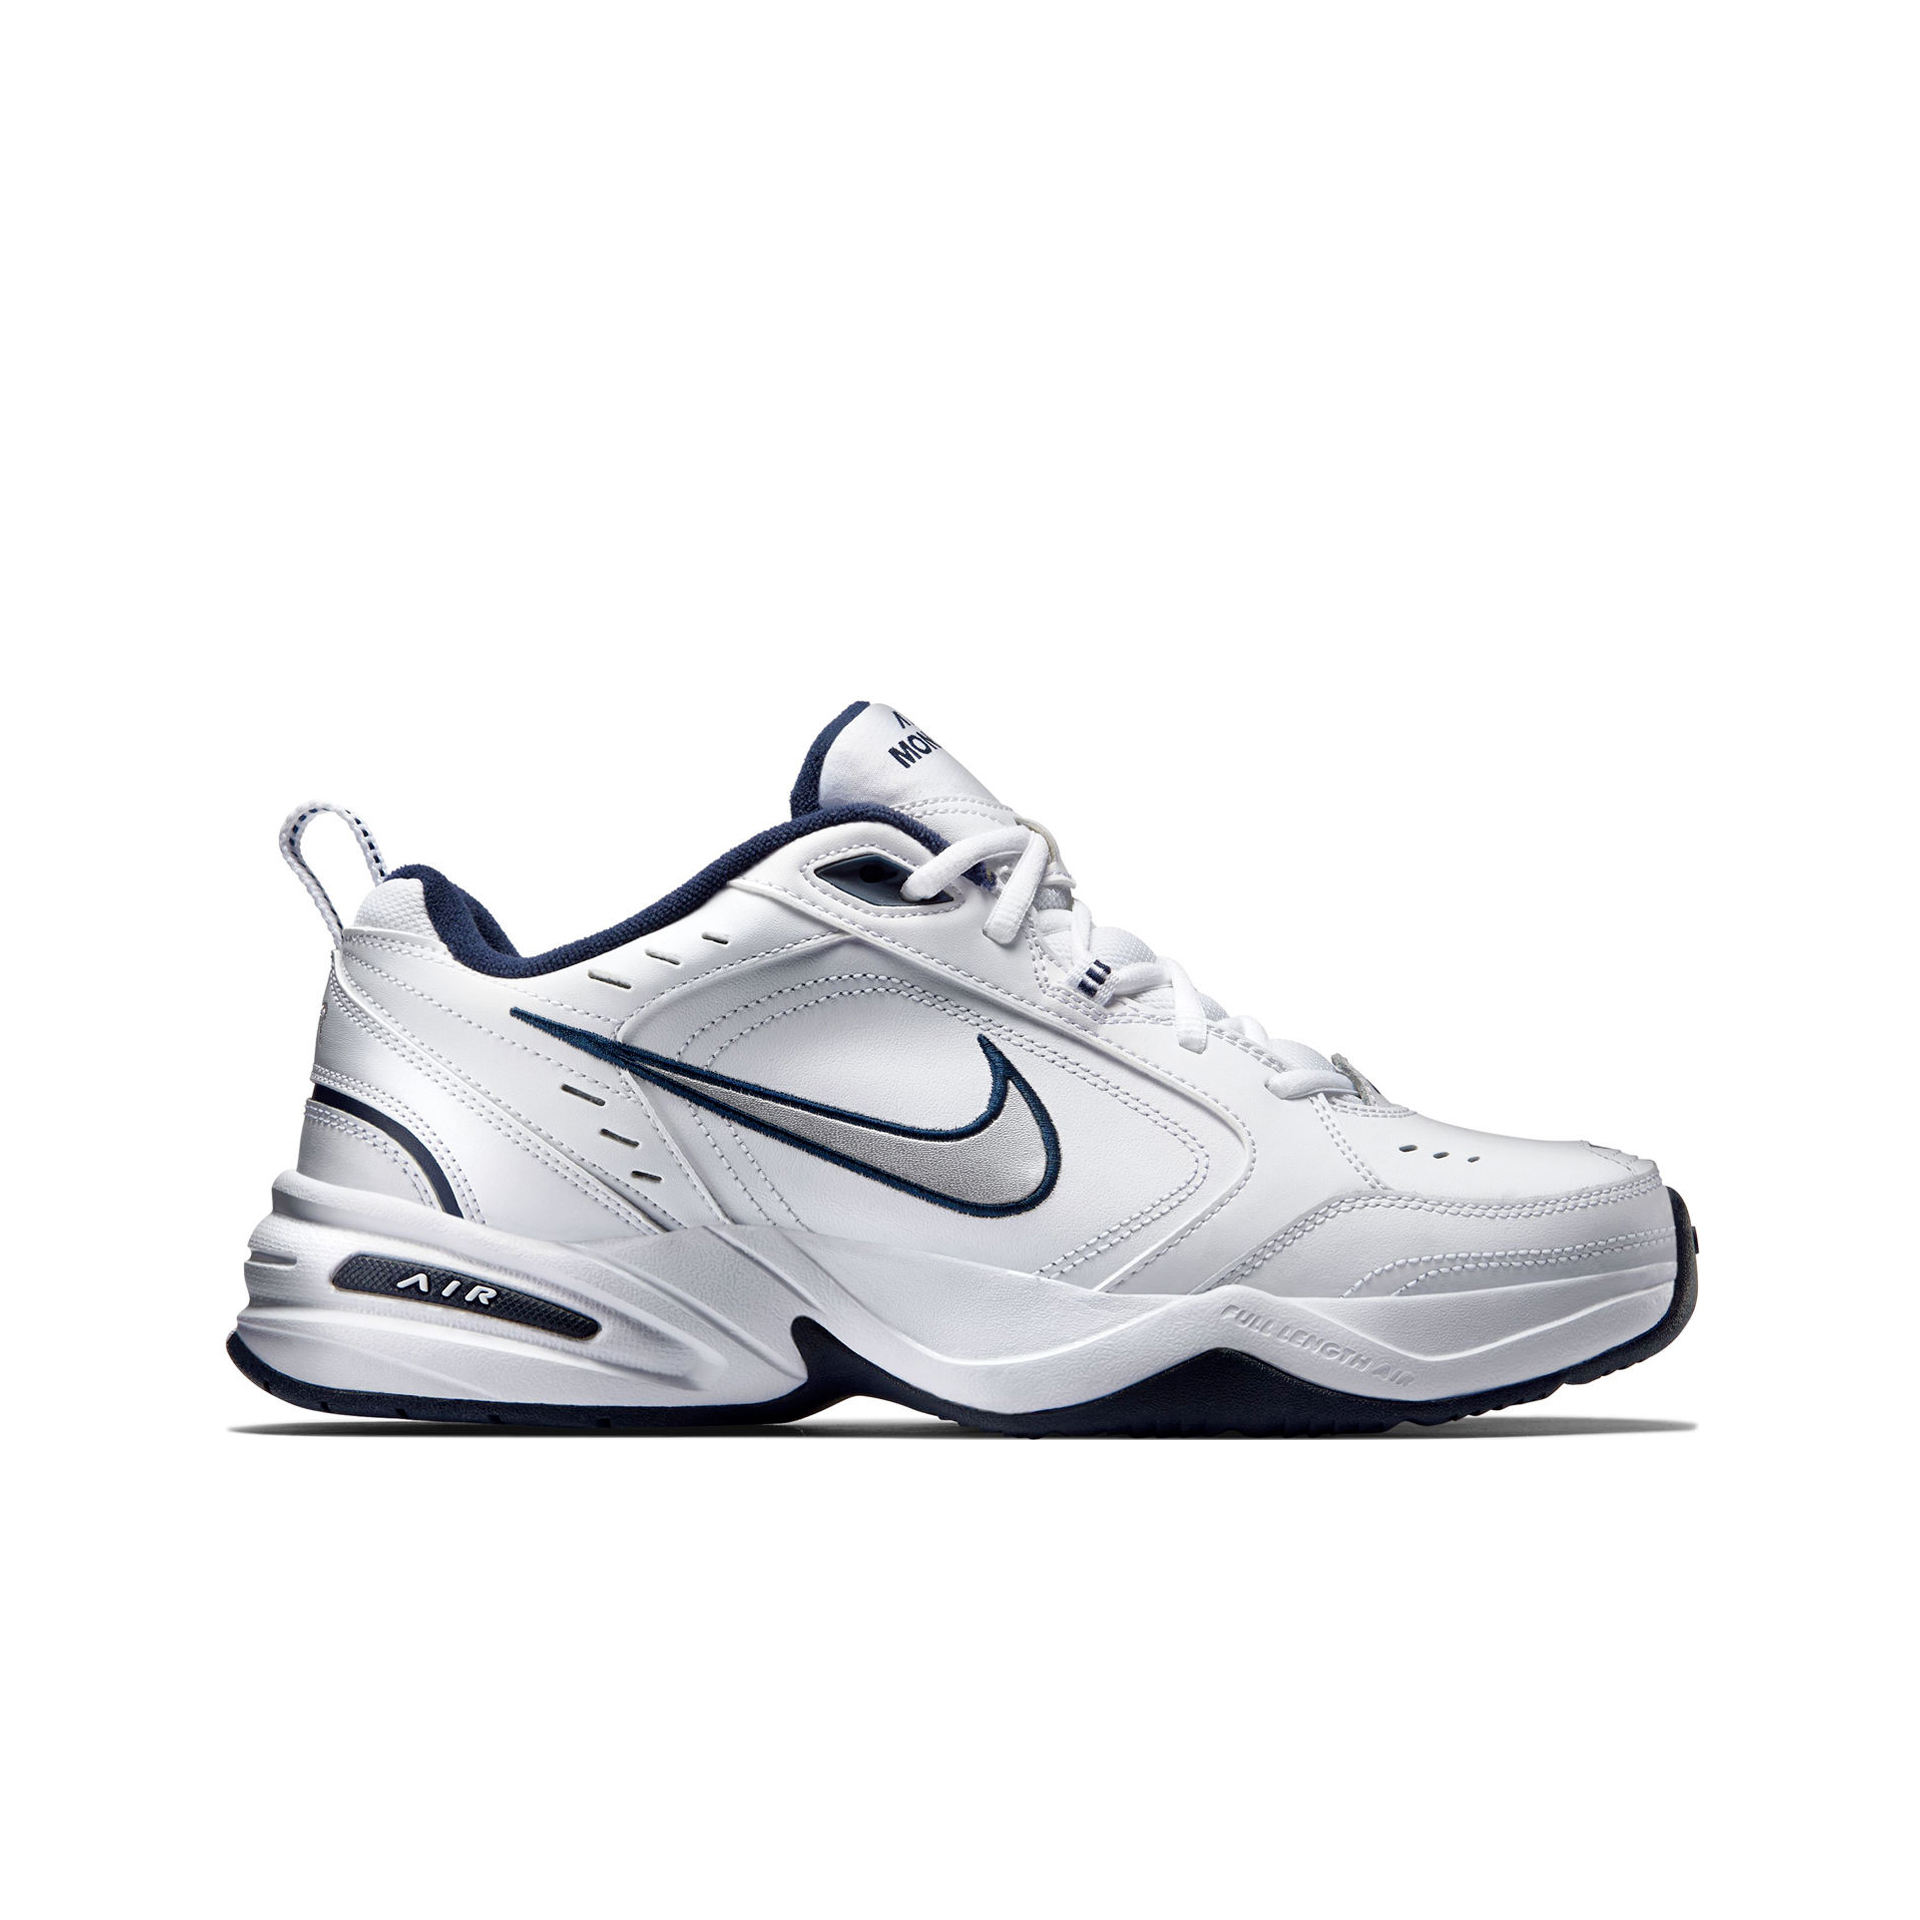 Nike Air Monarch Iv blanco zapatillas running Sneakers